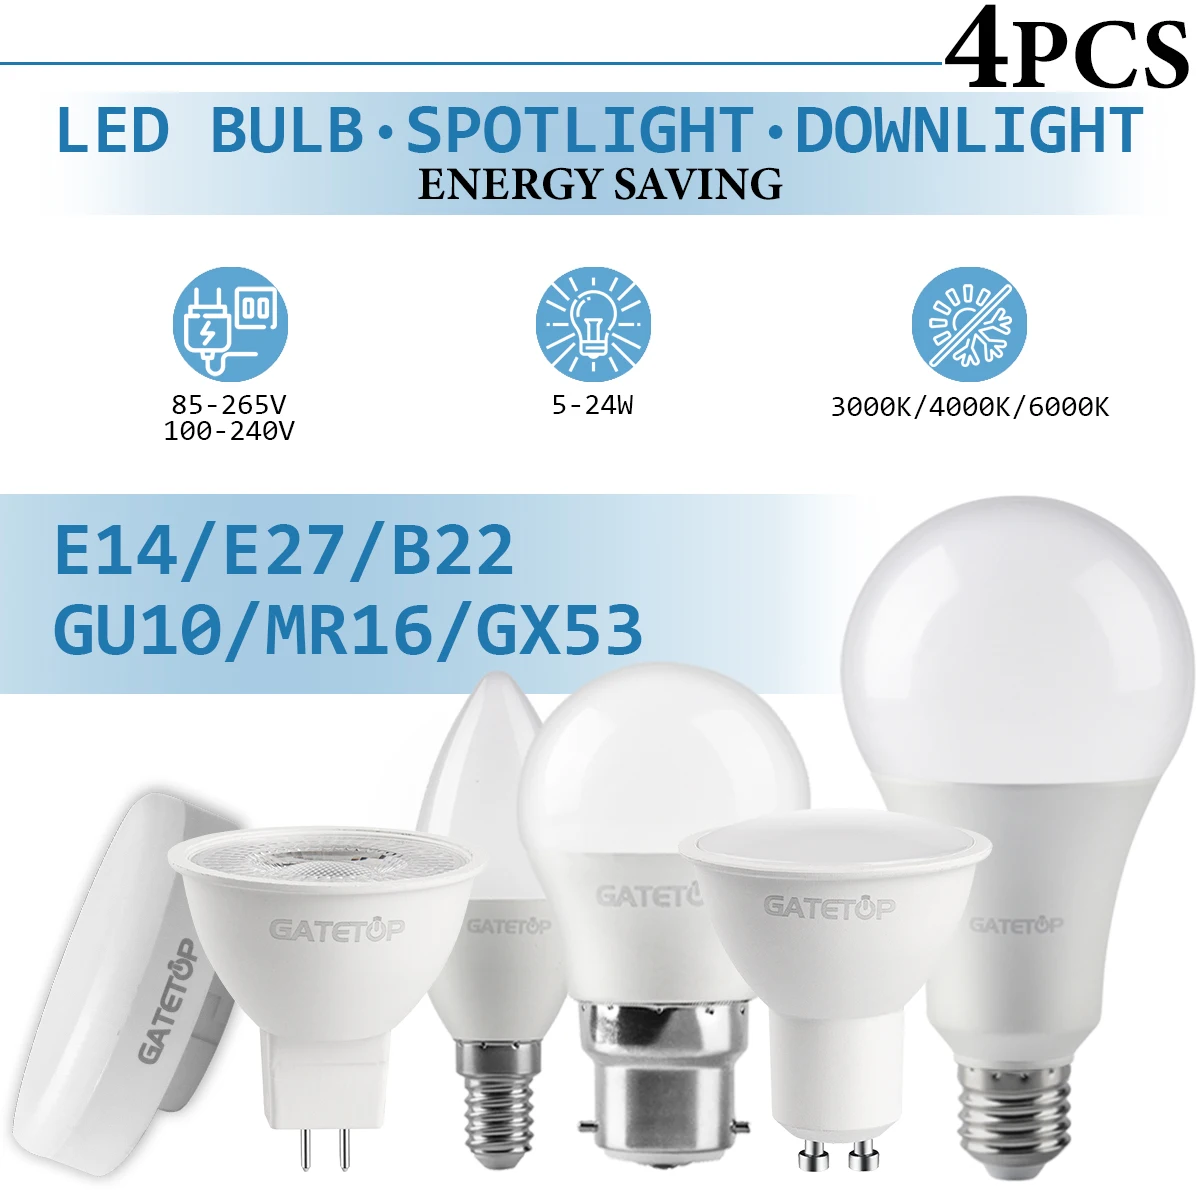 

4PCS GU10 MR16 Led Spotlight AC100-240V 85-265V Downlight Bulb E27 E14 Spot GU5.3 Lamp Lighting Indoor Home Decoration Bombillas